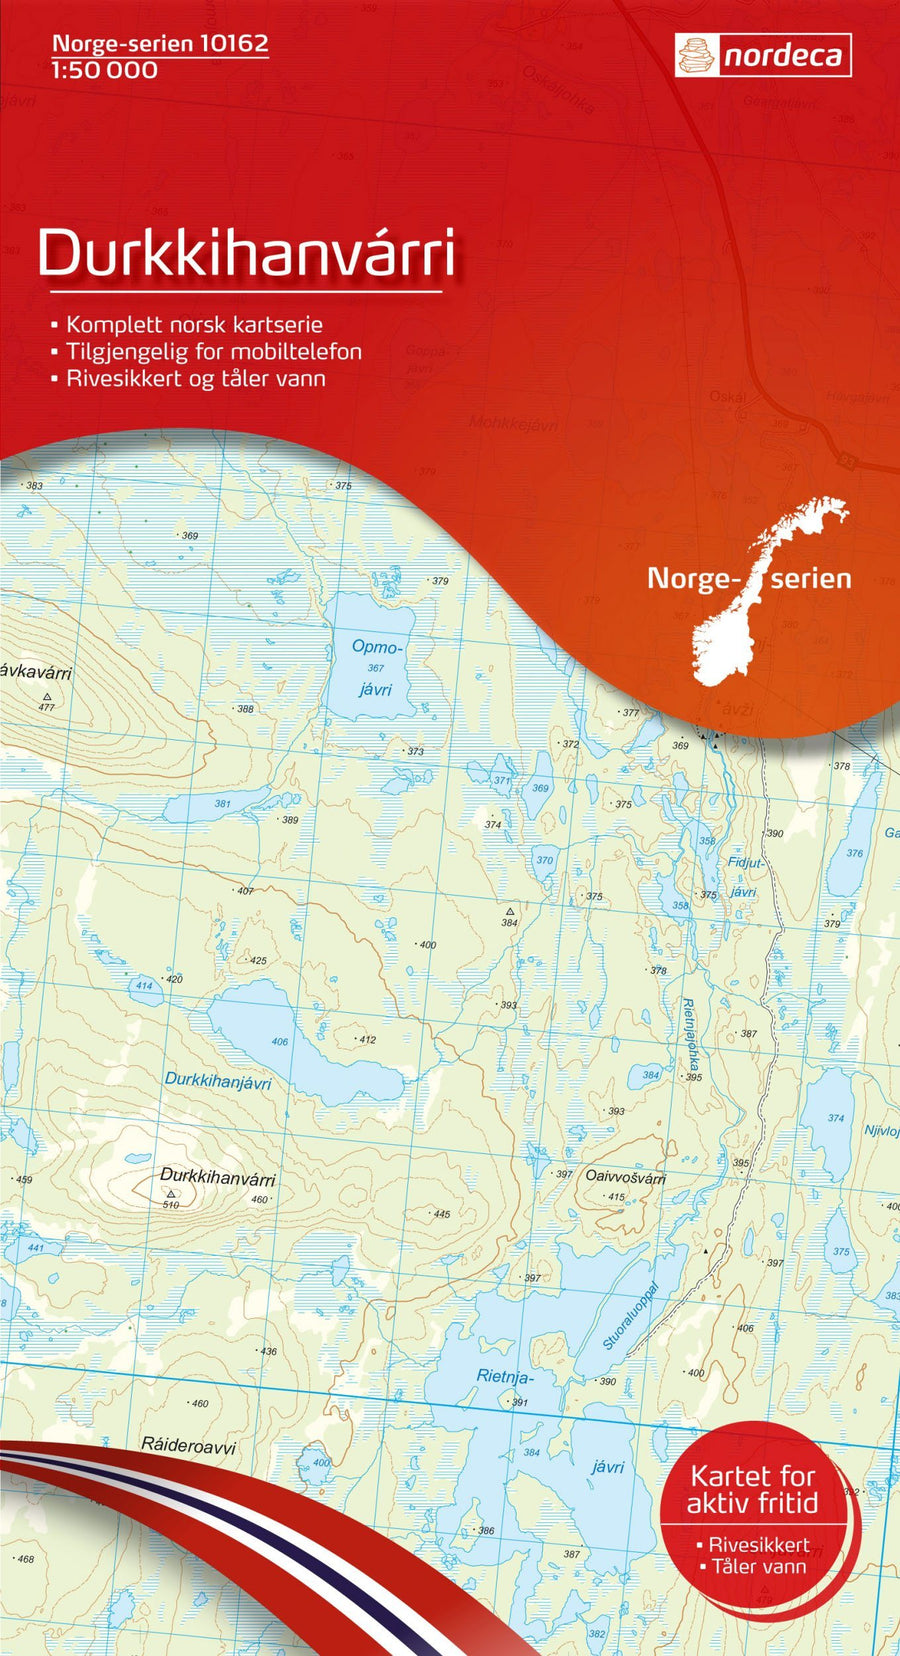 Carte de randonnée n° 10162 - Durkkihanvarri (Norvège) | Nordeca - Norge-serien carte pliée Nordeca 